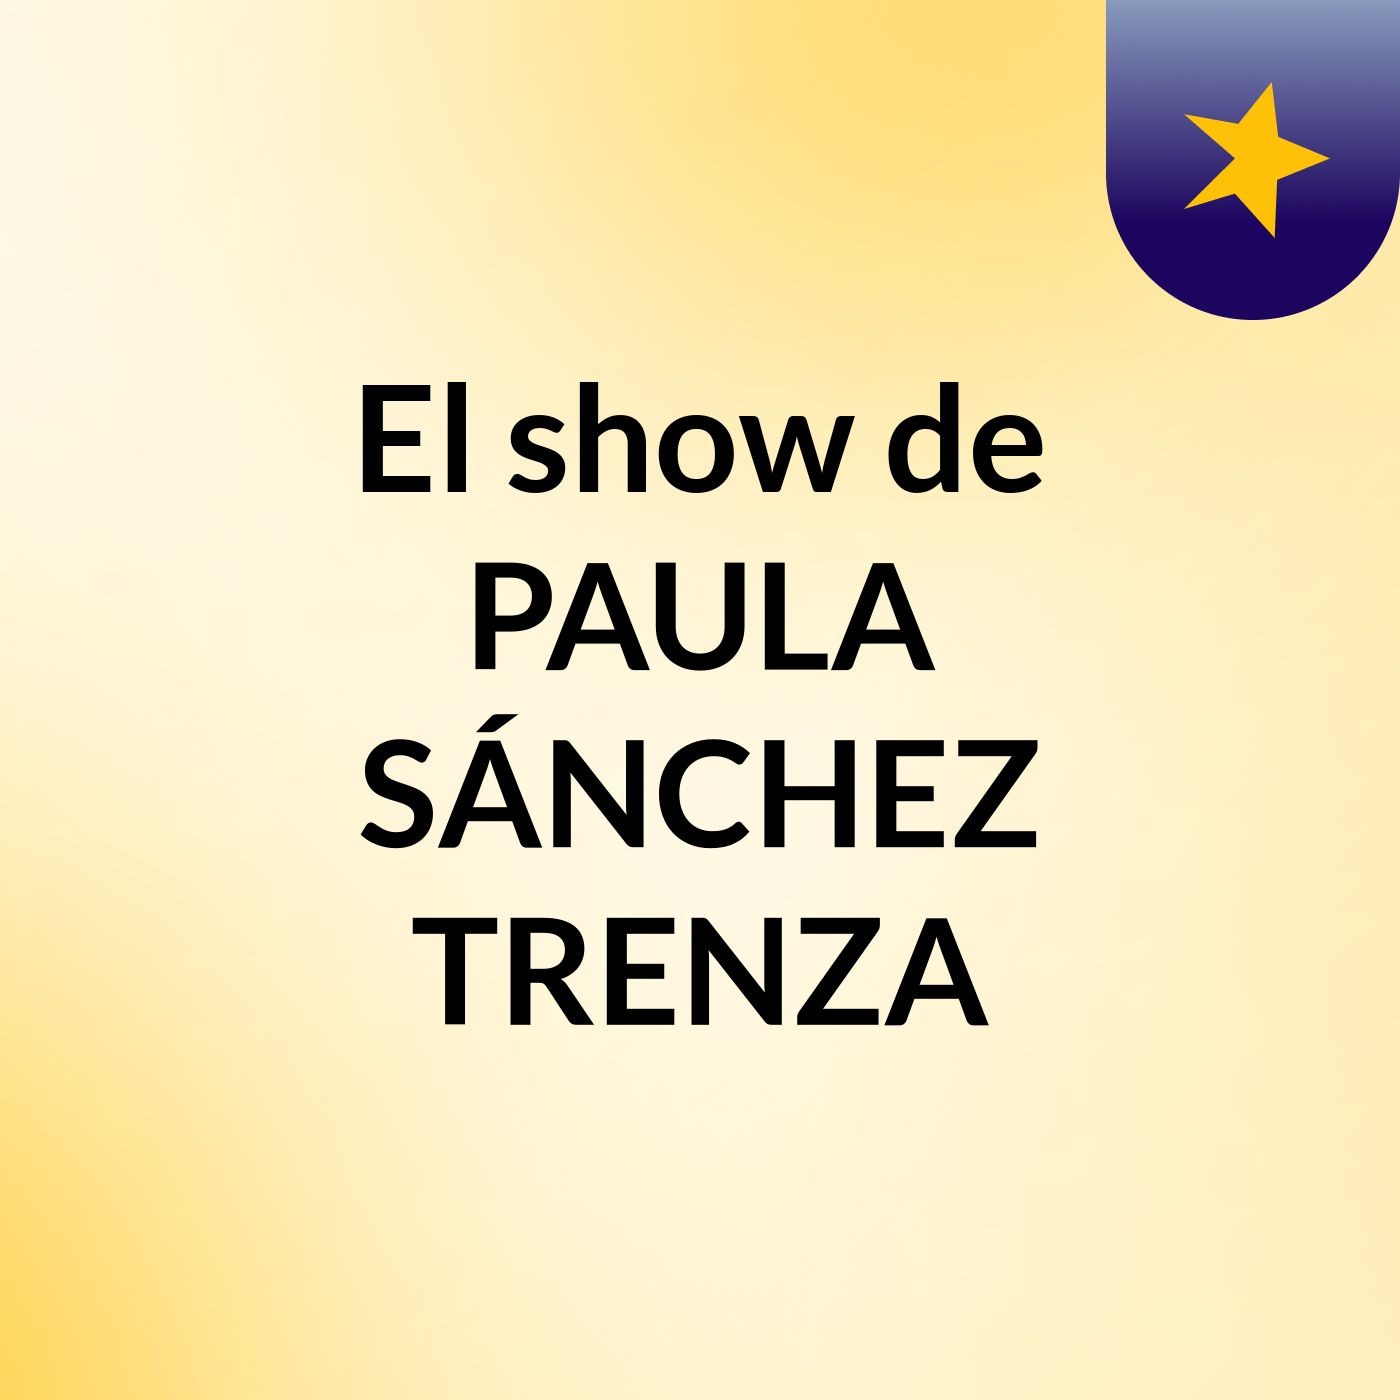 El show de PAULA SÁNCHEZ TRENZA